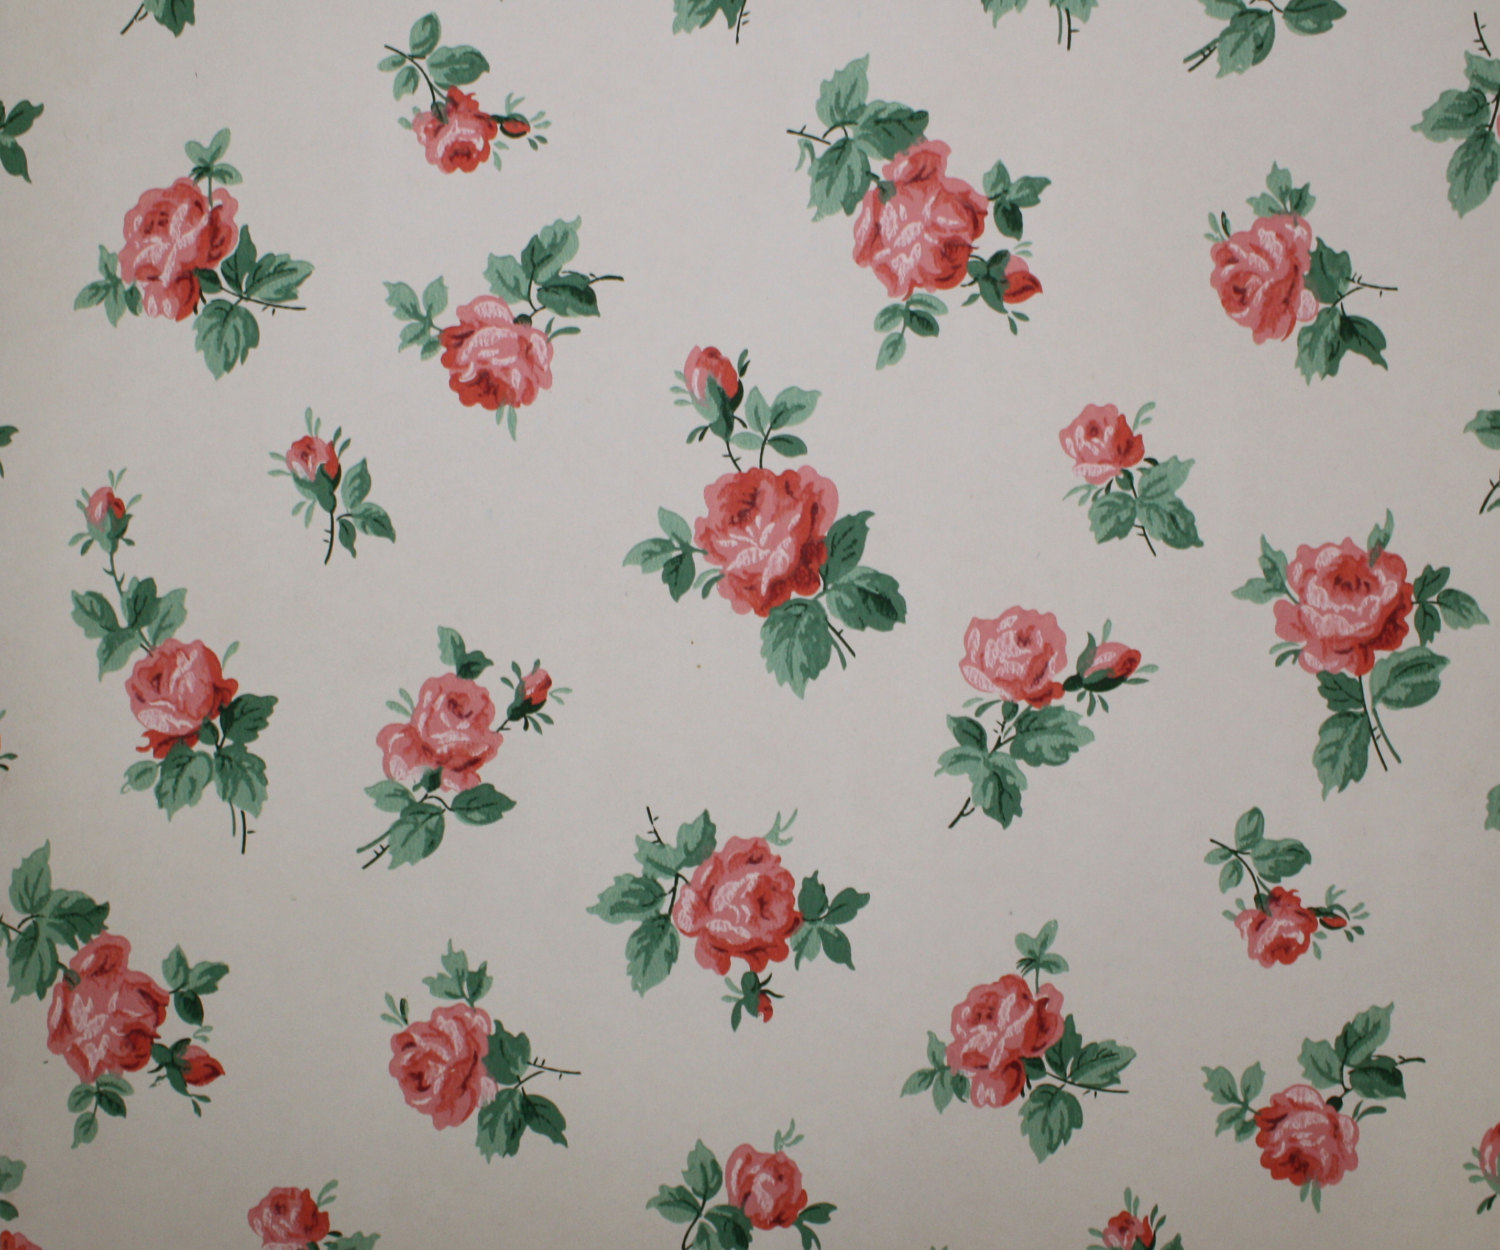 S Vintage Wallpaper Roses By Hannahstreasures